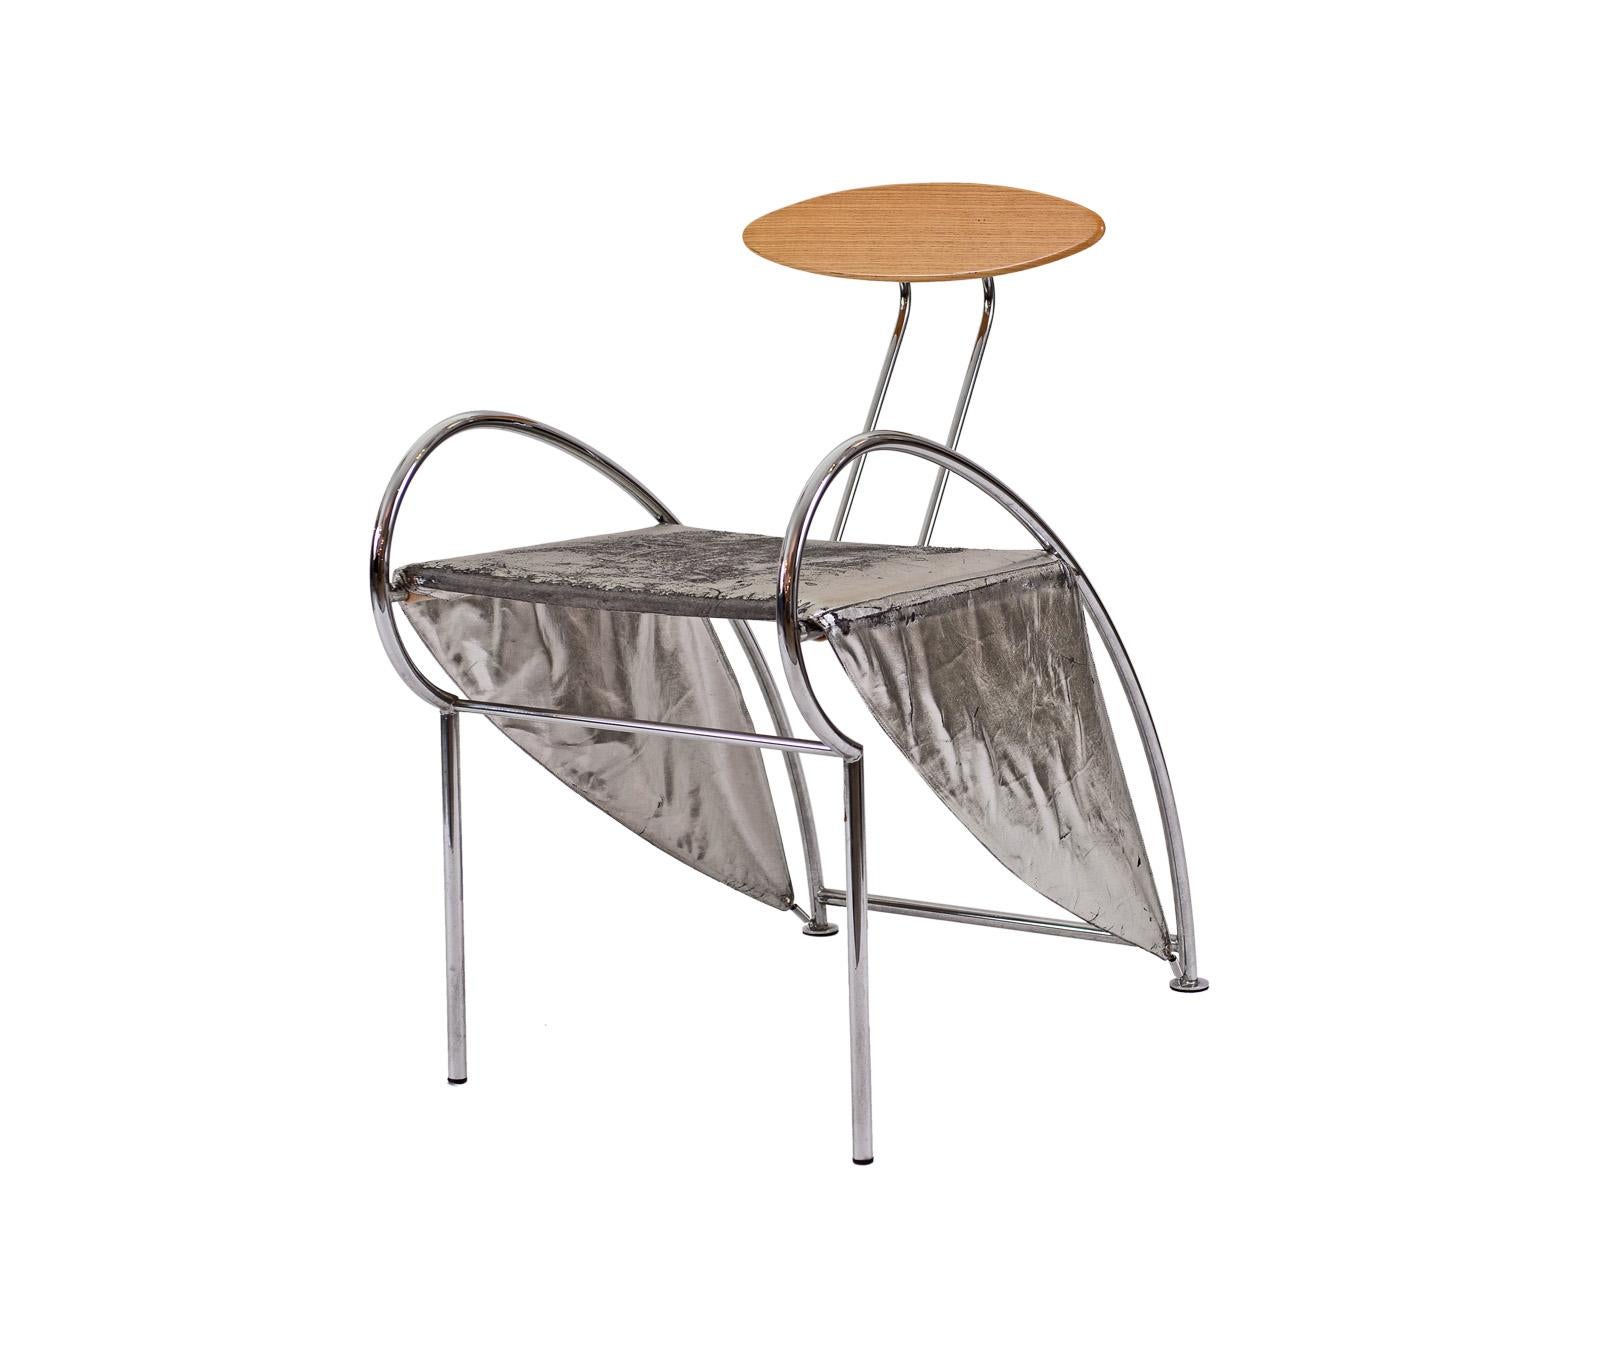 Very rare furniture-sculpture, Design: Massimo Iosa Ghini, Moroso, Milano, 1987. Literature: N. Bellati, Neues italienisches design, 1990.
Material used is leather in silver, wooden backrest.